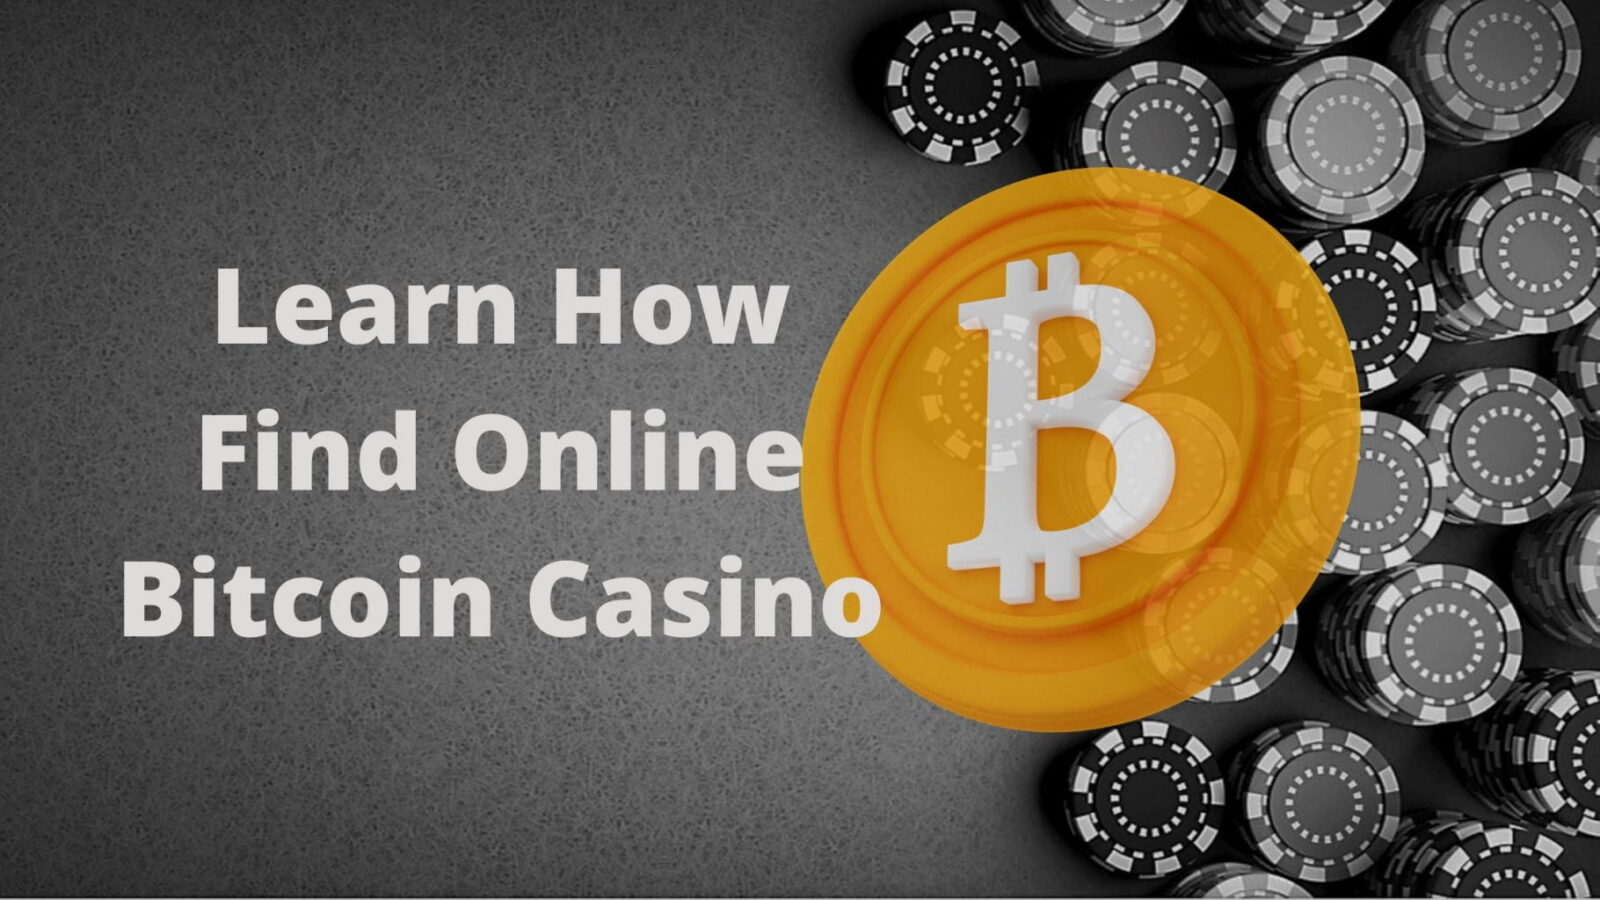 bitcoin gambling casino in 2021 – Predictions